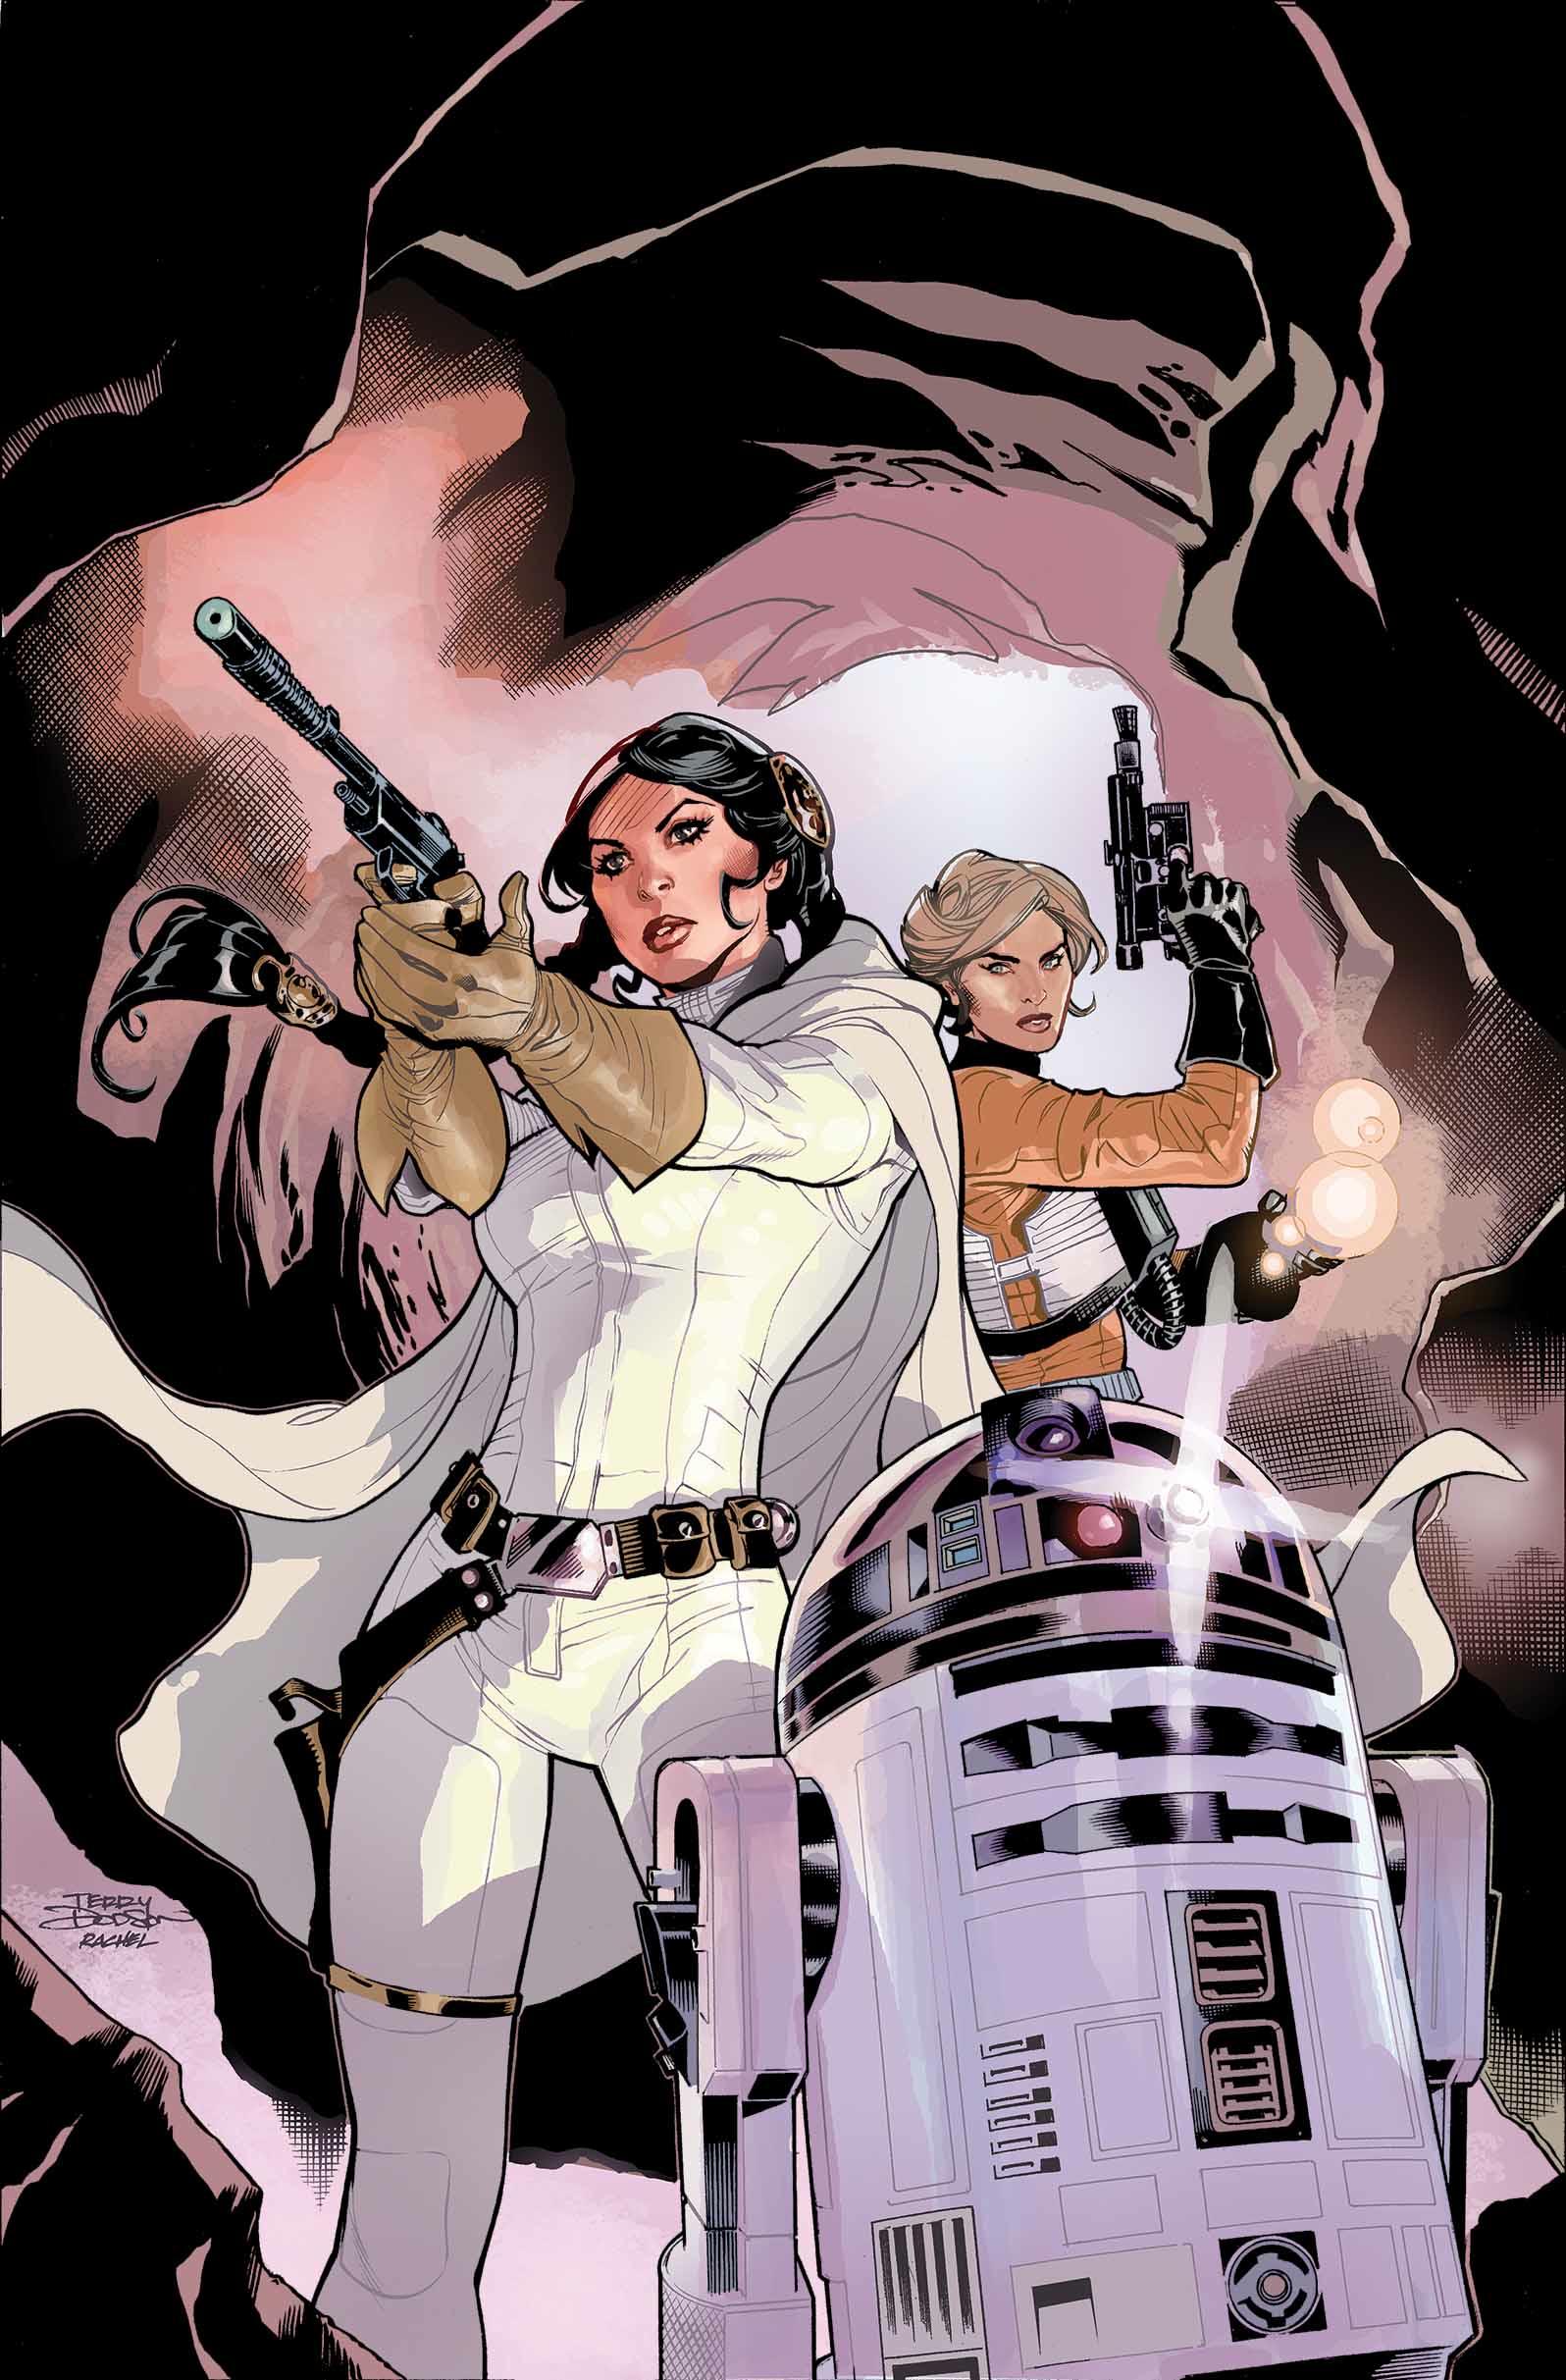 Plik:Princess Leia 3 cover art.jpg